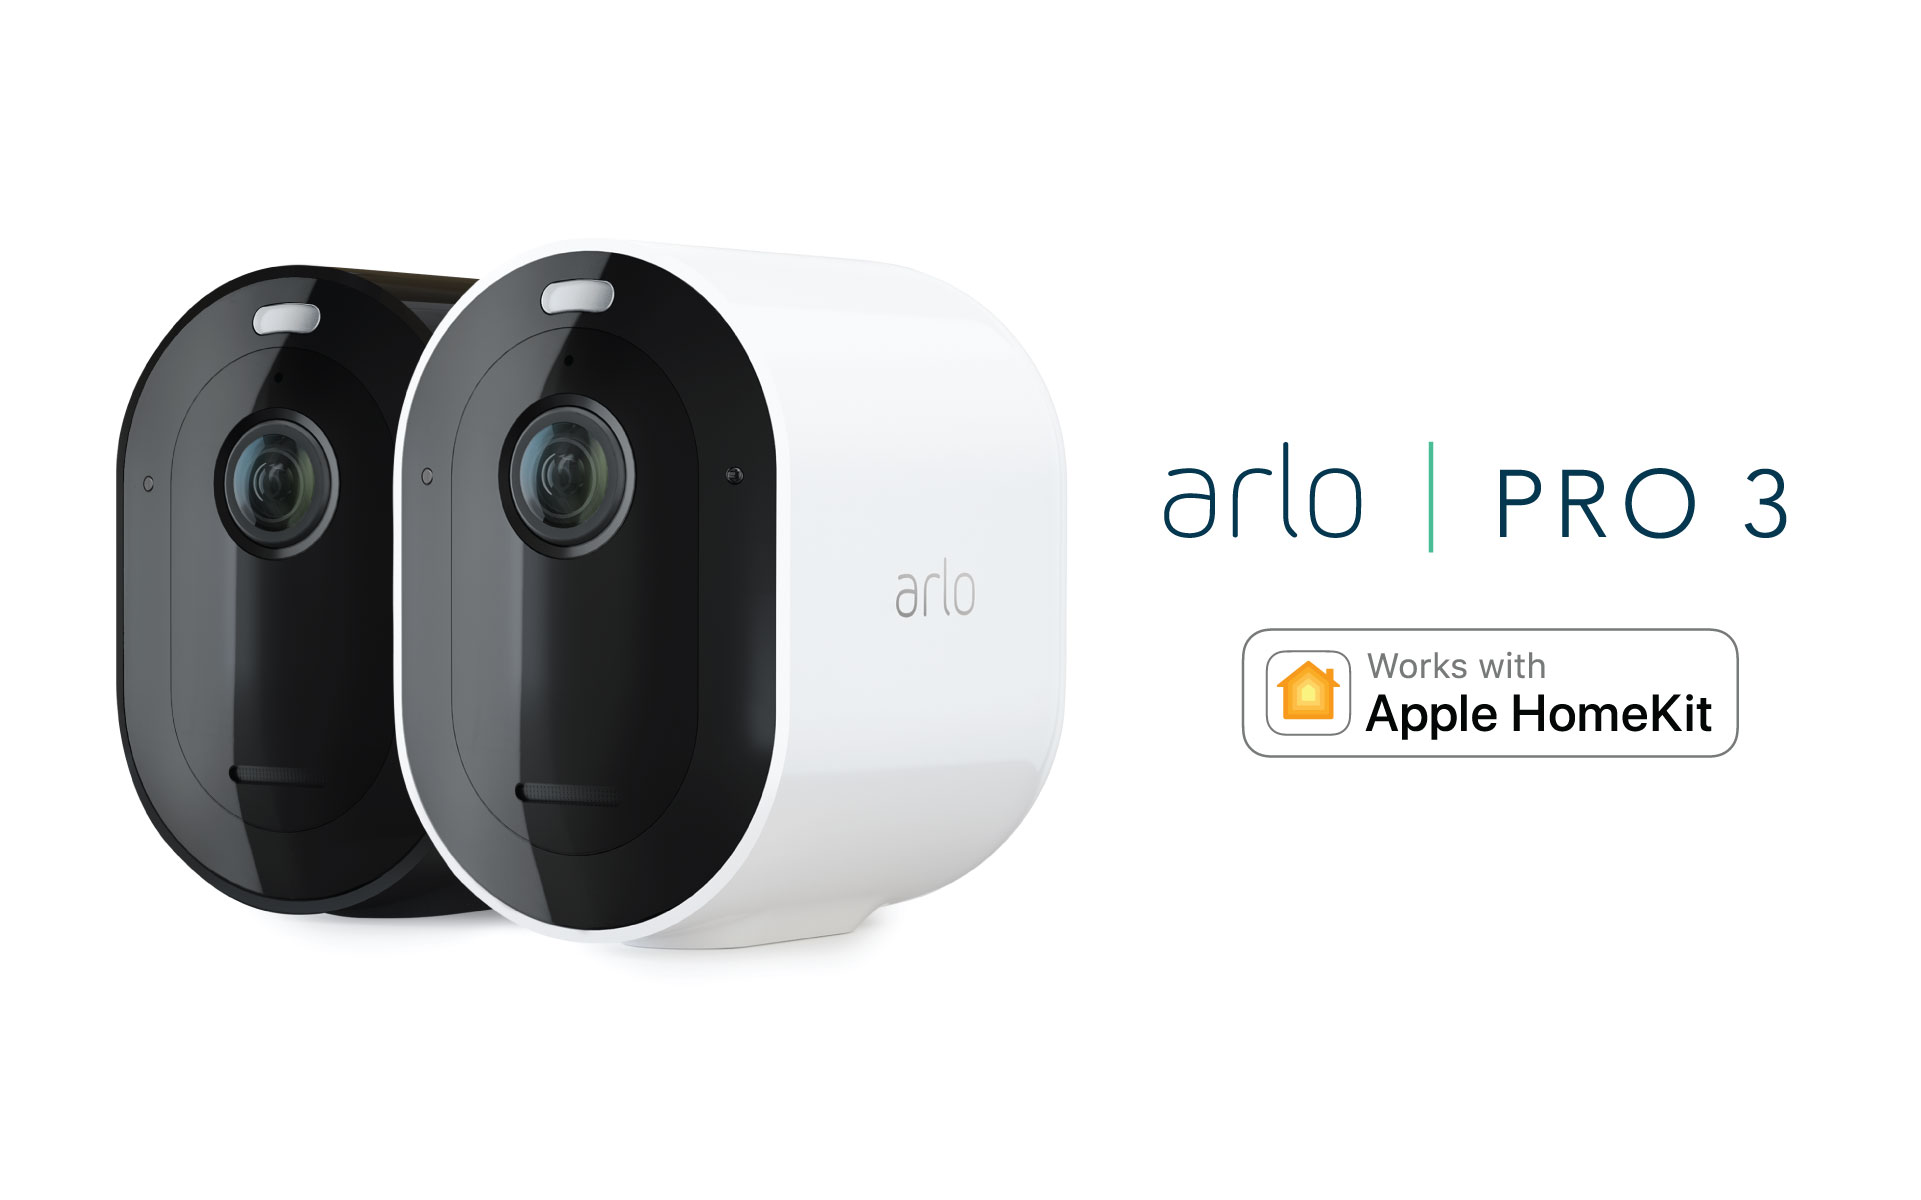 Apple HomeKit is now compatible with Arlo Pro 3 ca - Arlo Community